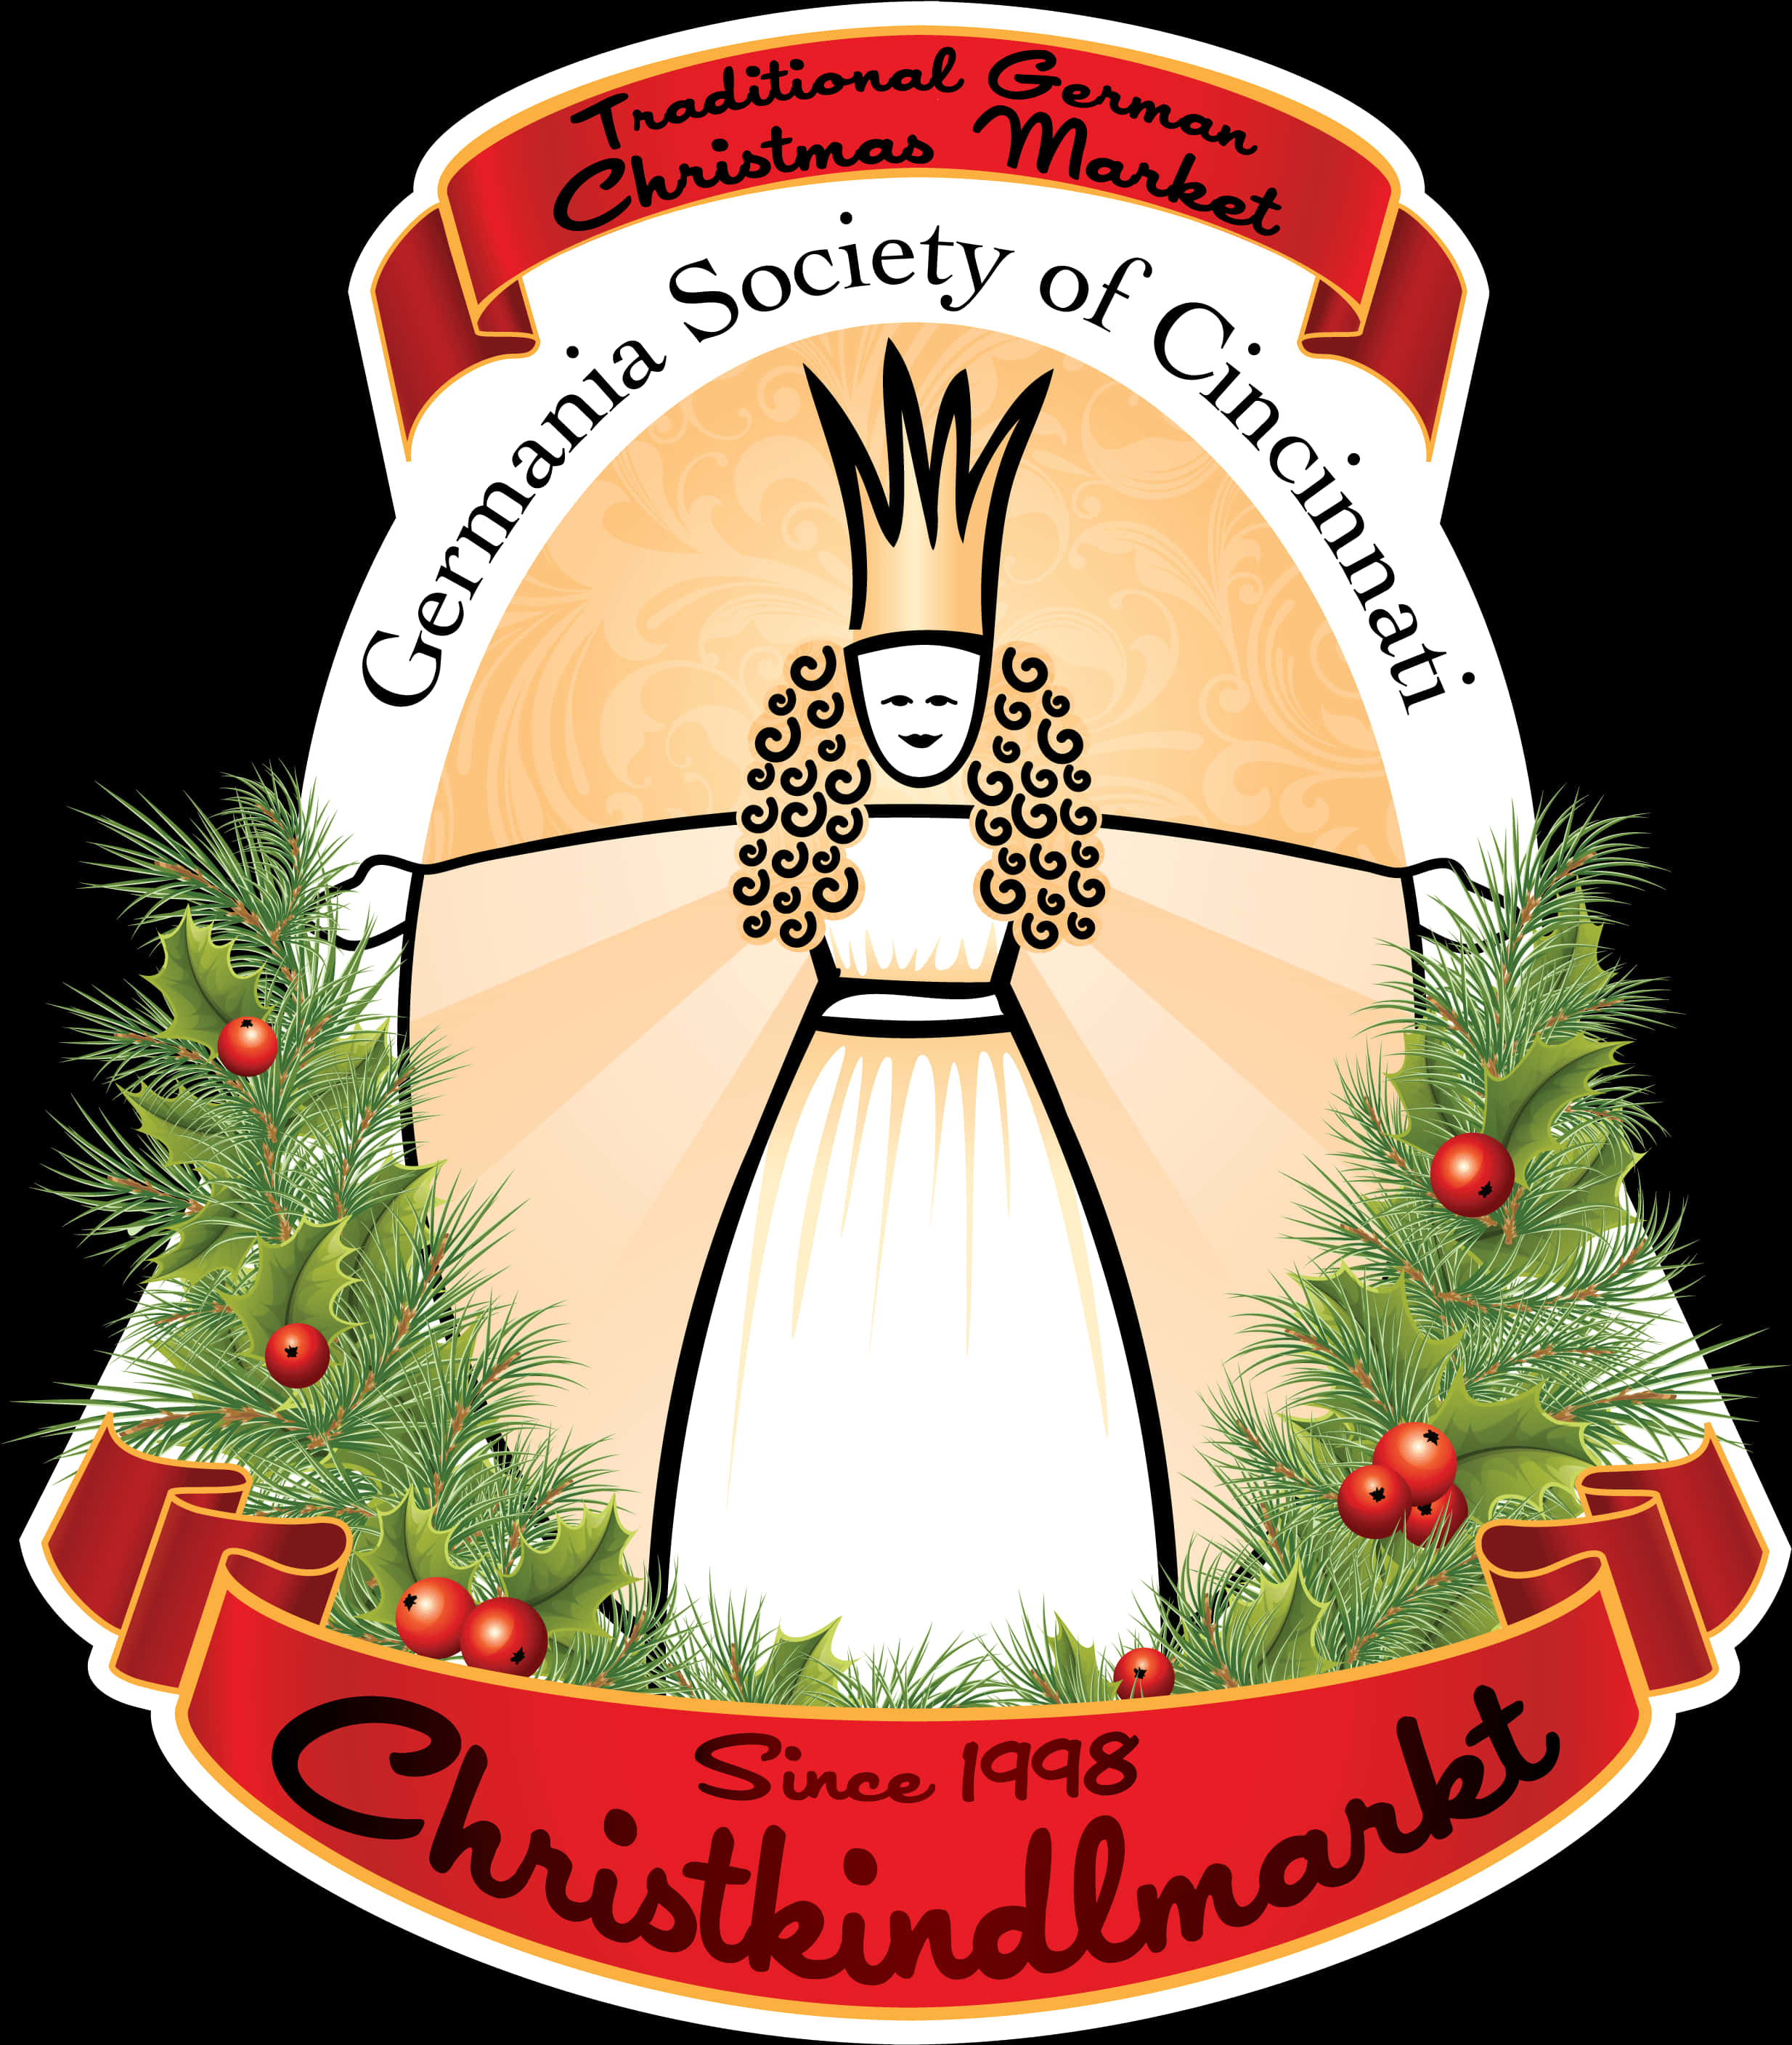 Germania Christkindlmarkt Cincinnati Logo PNG image